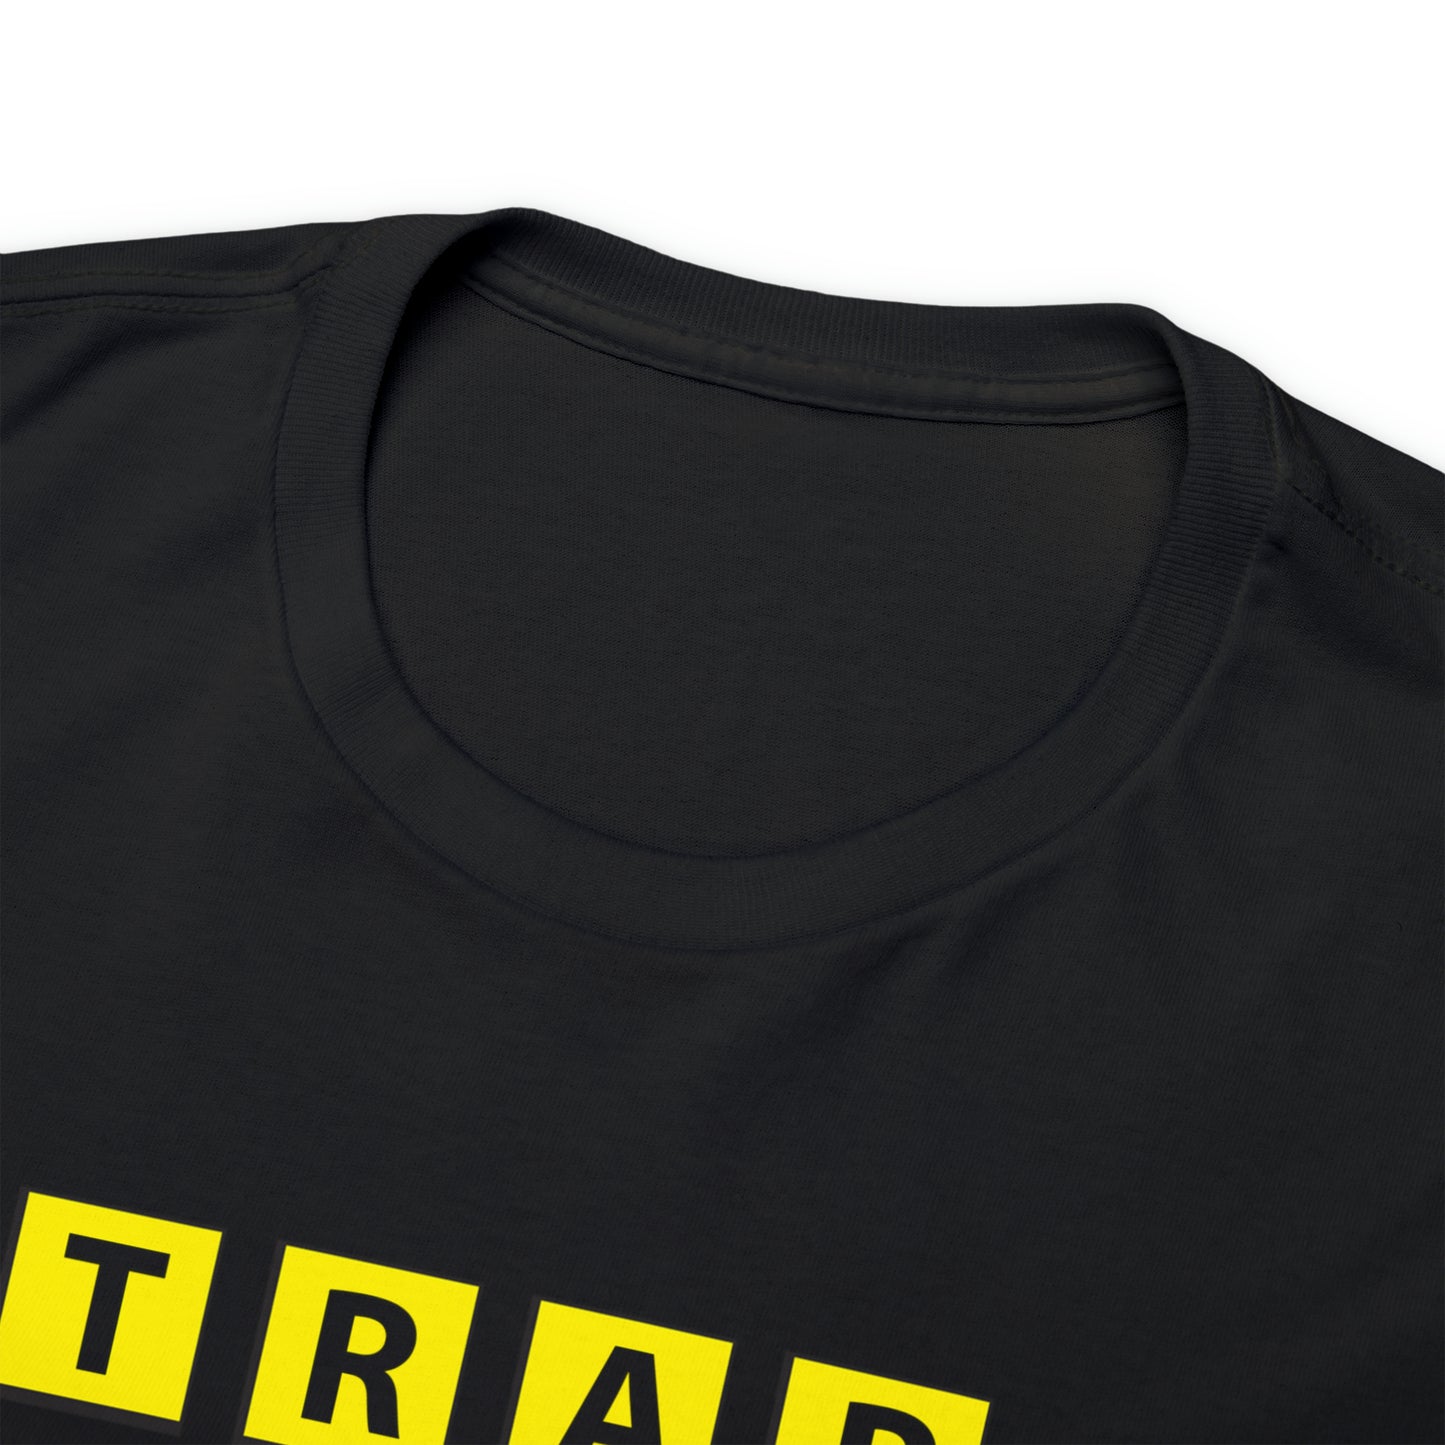 Trap House T-Shirt